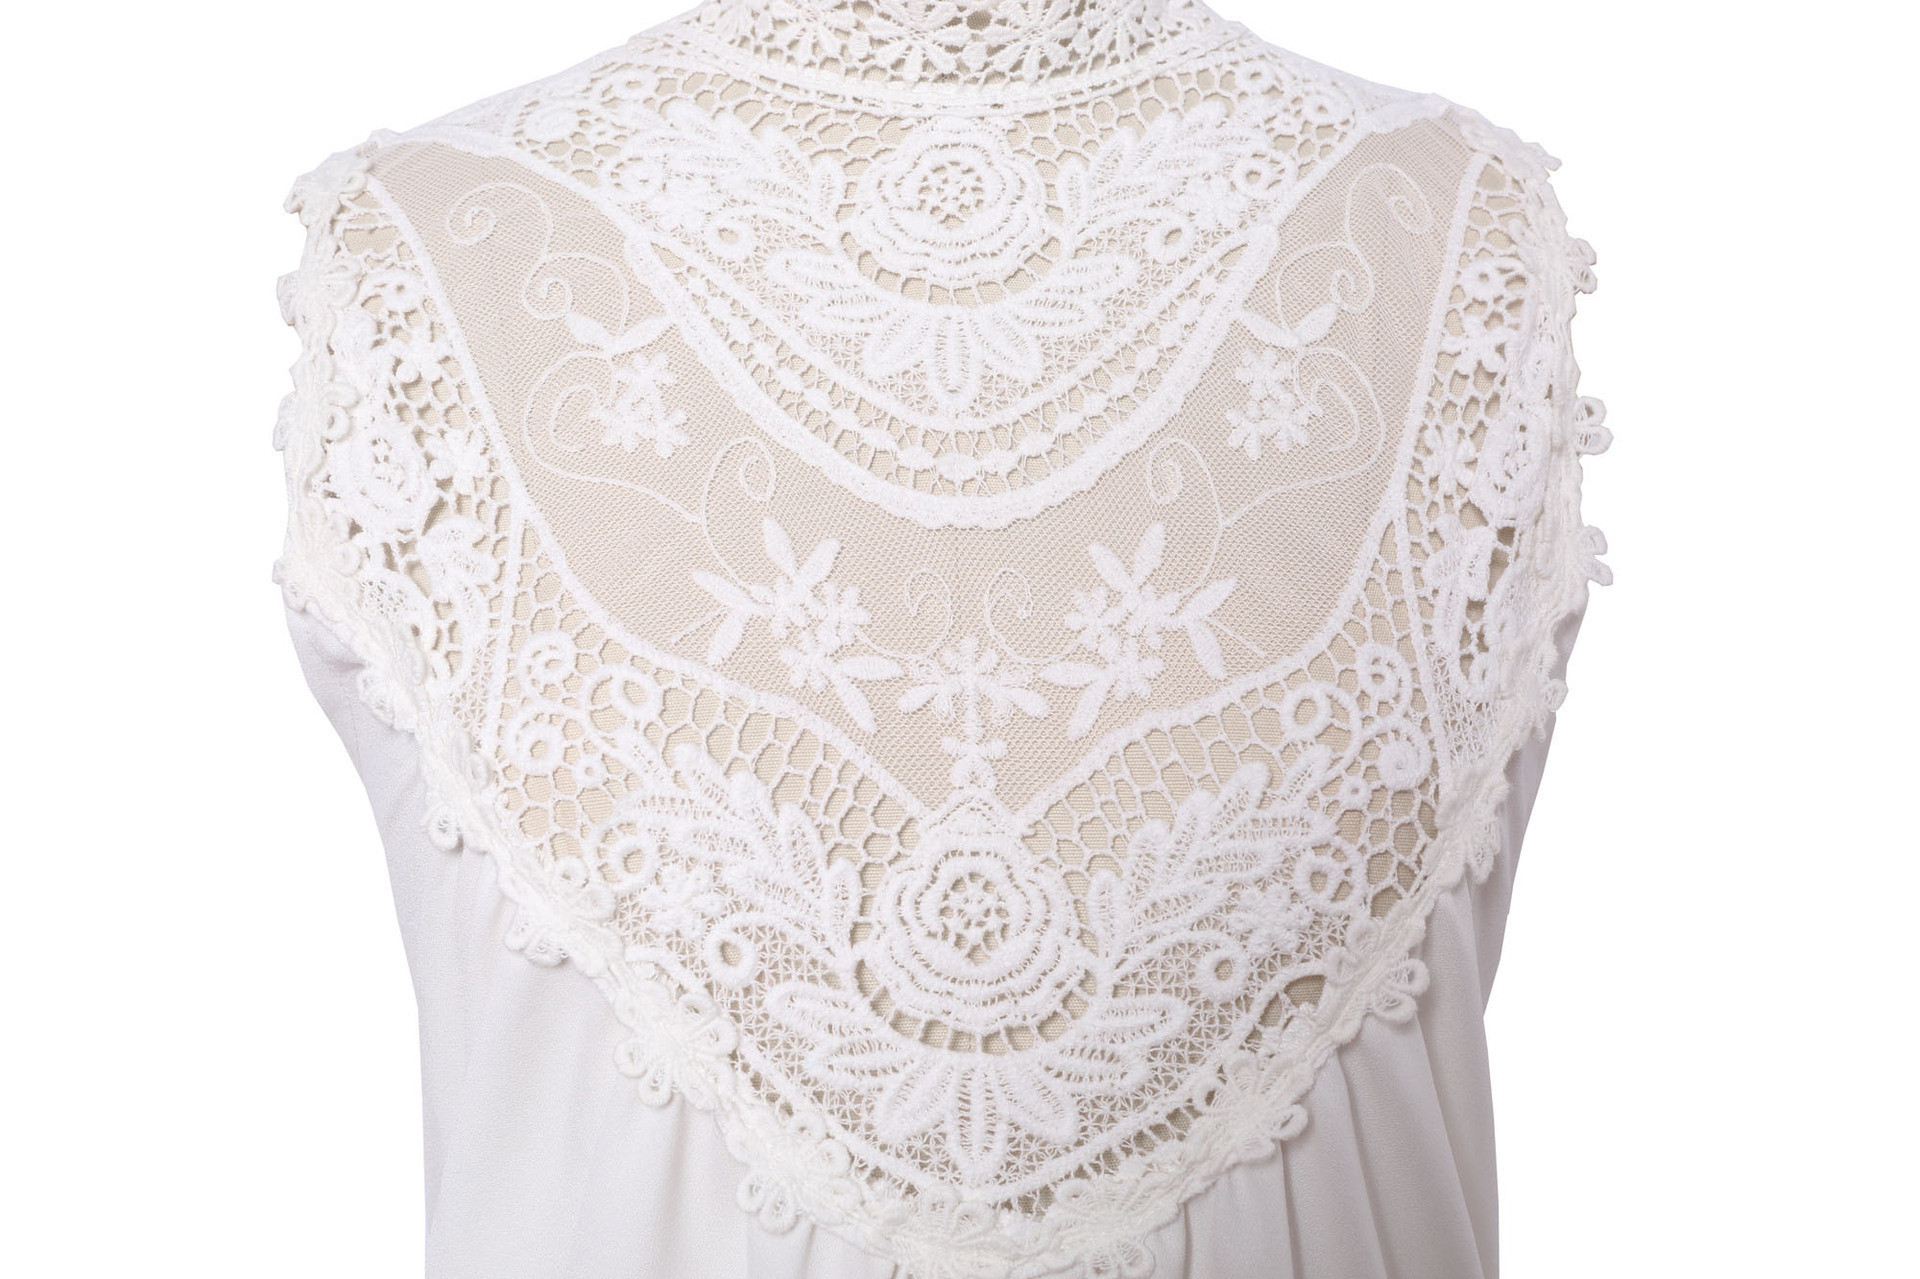 High Collar Lace White Dress Xq62826 on Luulla